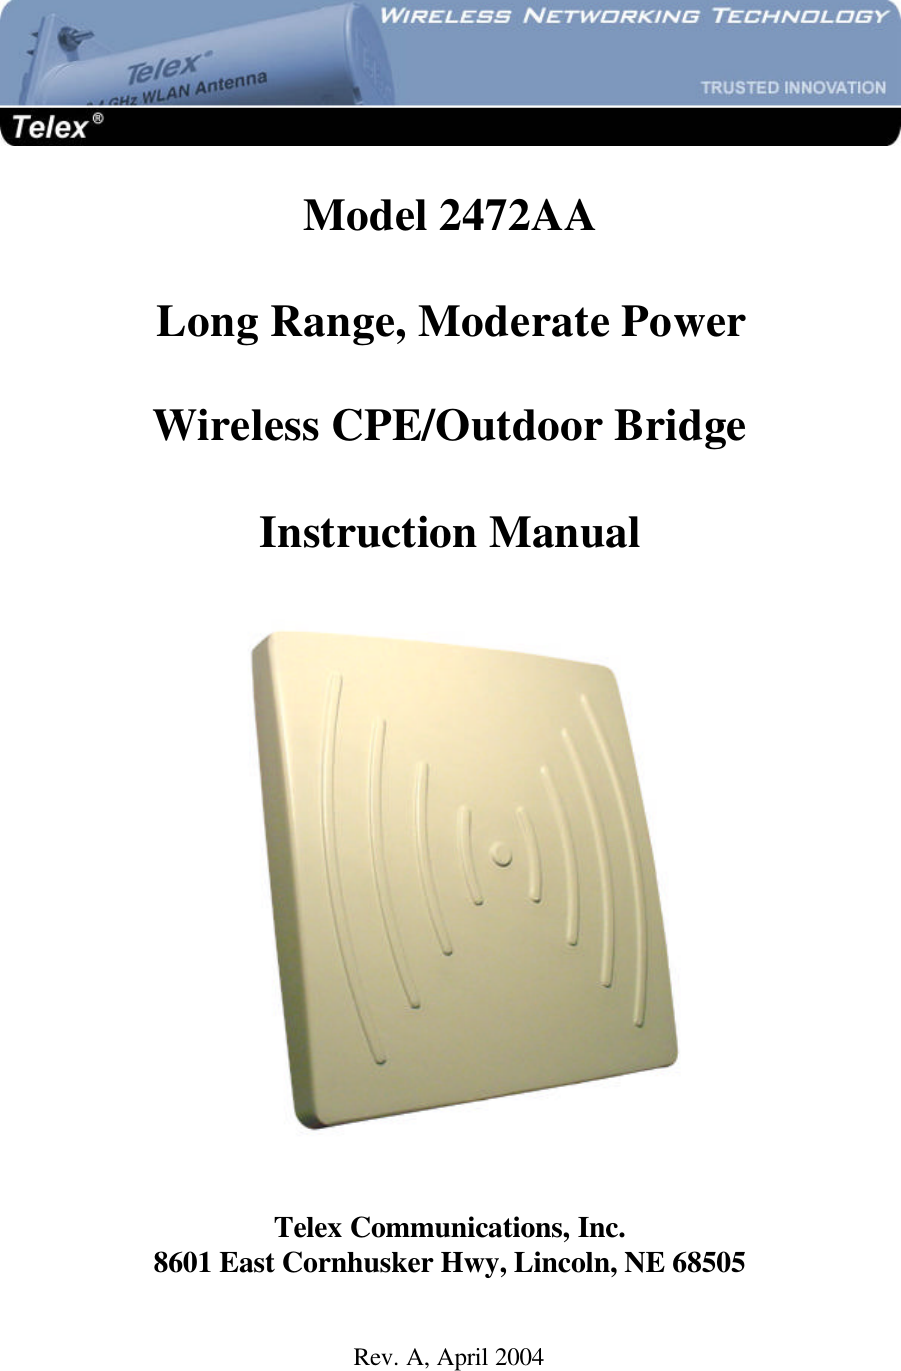   Model 2472AA  Long Range, Moderate Power  Wireless CPE/Outdoor Bridge  Instruction Manual    Telex Communications, Inc. 8601 East Cornhusker Hwy, Lincoln, NE 68505  Rev. A, April 2004